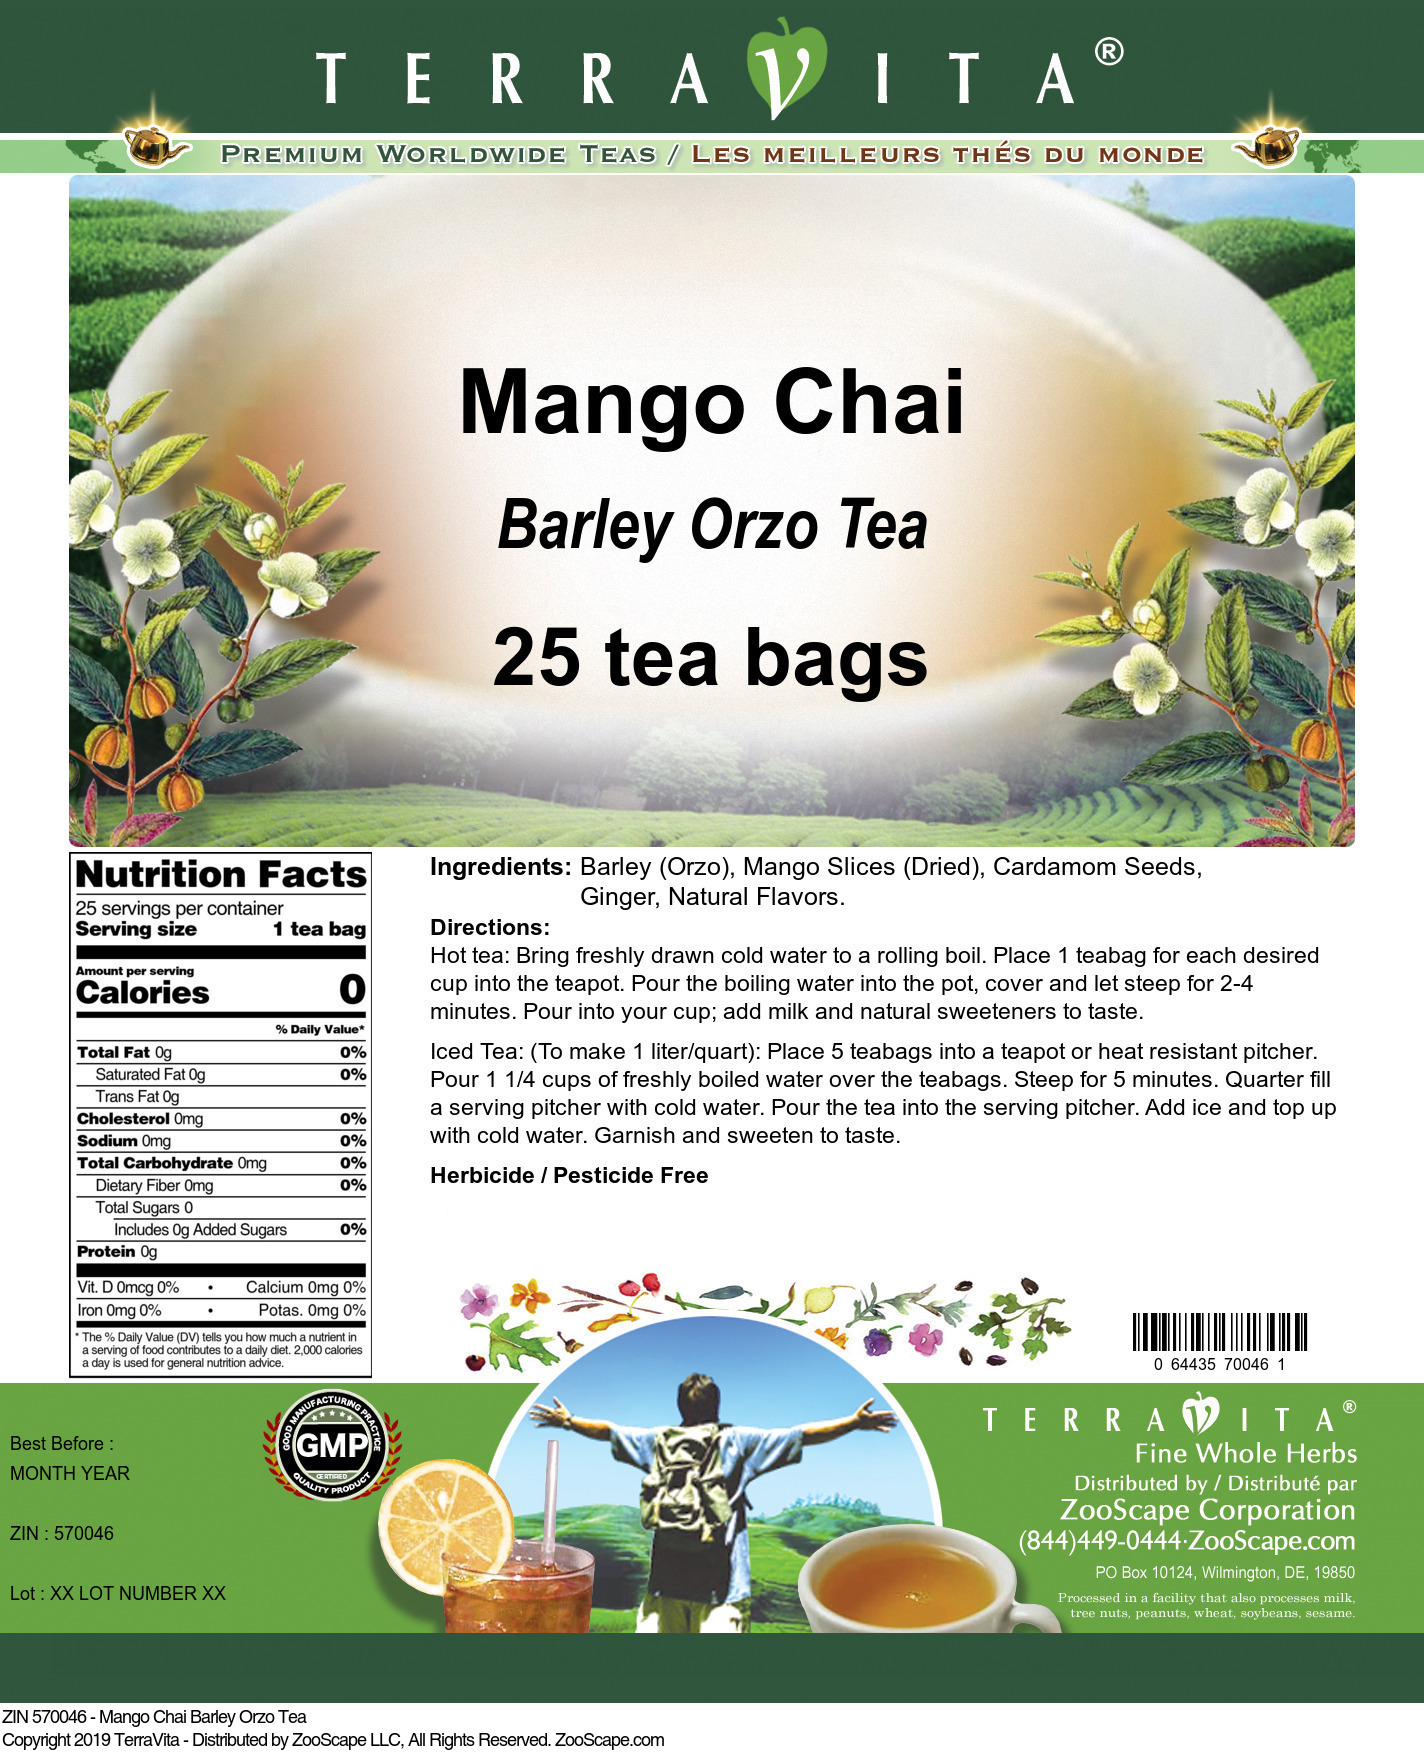 Mango Chai Barley Orzo Tea - Label